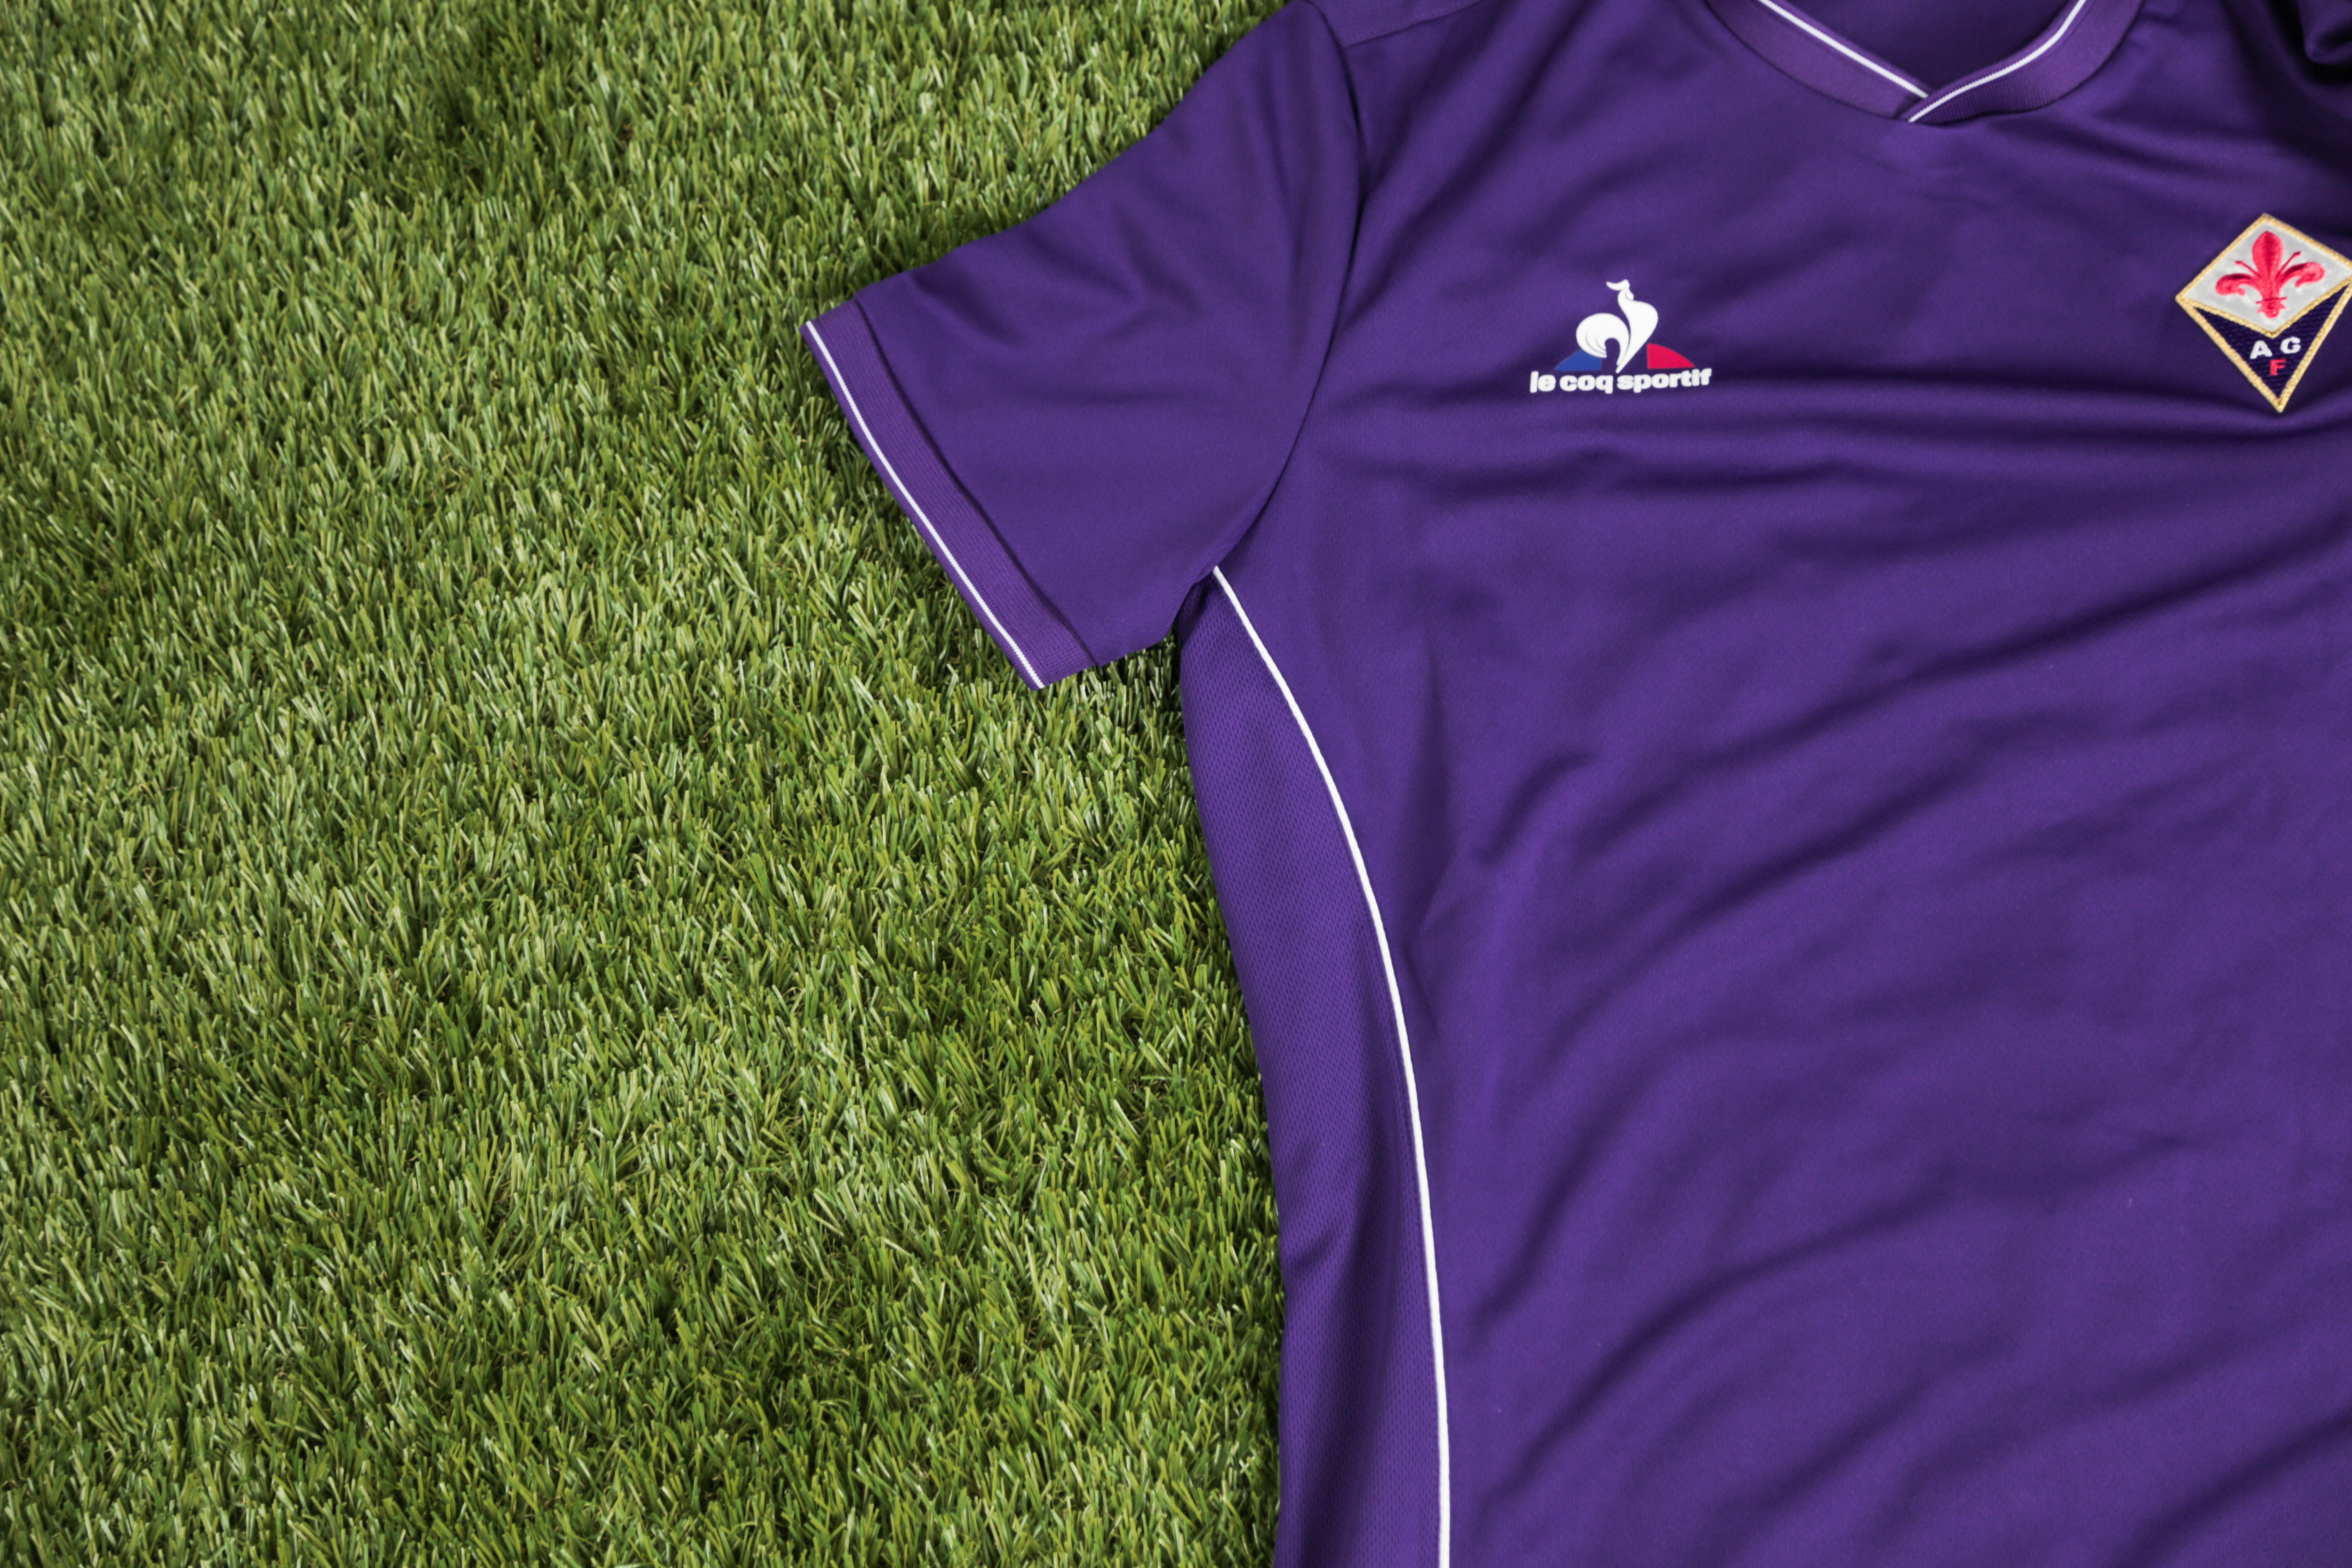 REVIEW: Fiorentina Le Coq Sportif 2015-16 home jersey